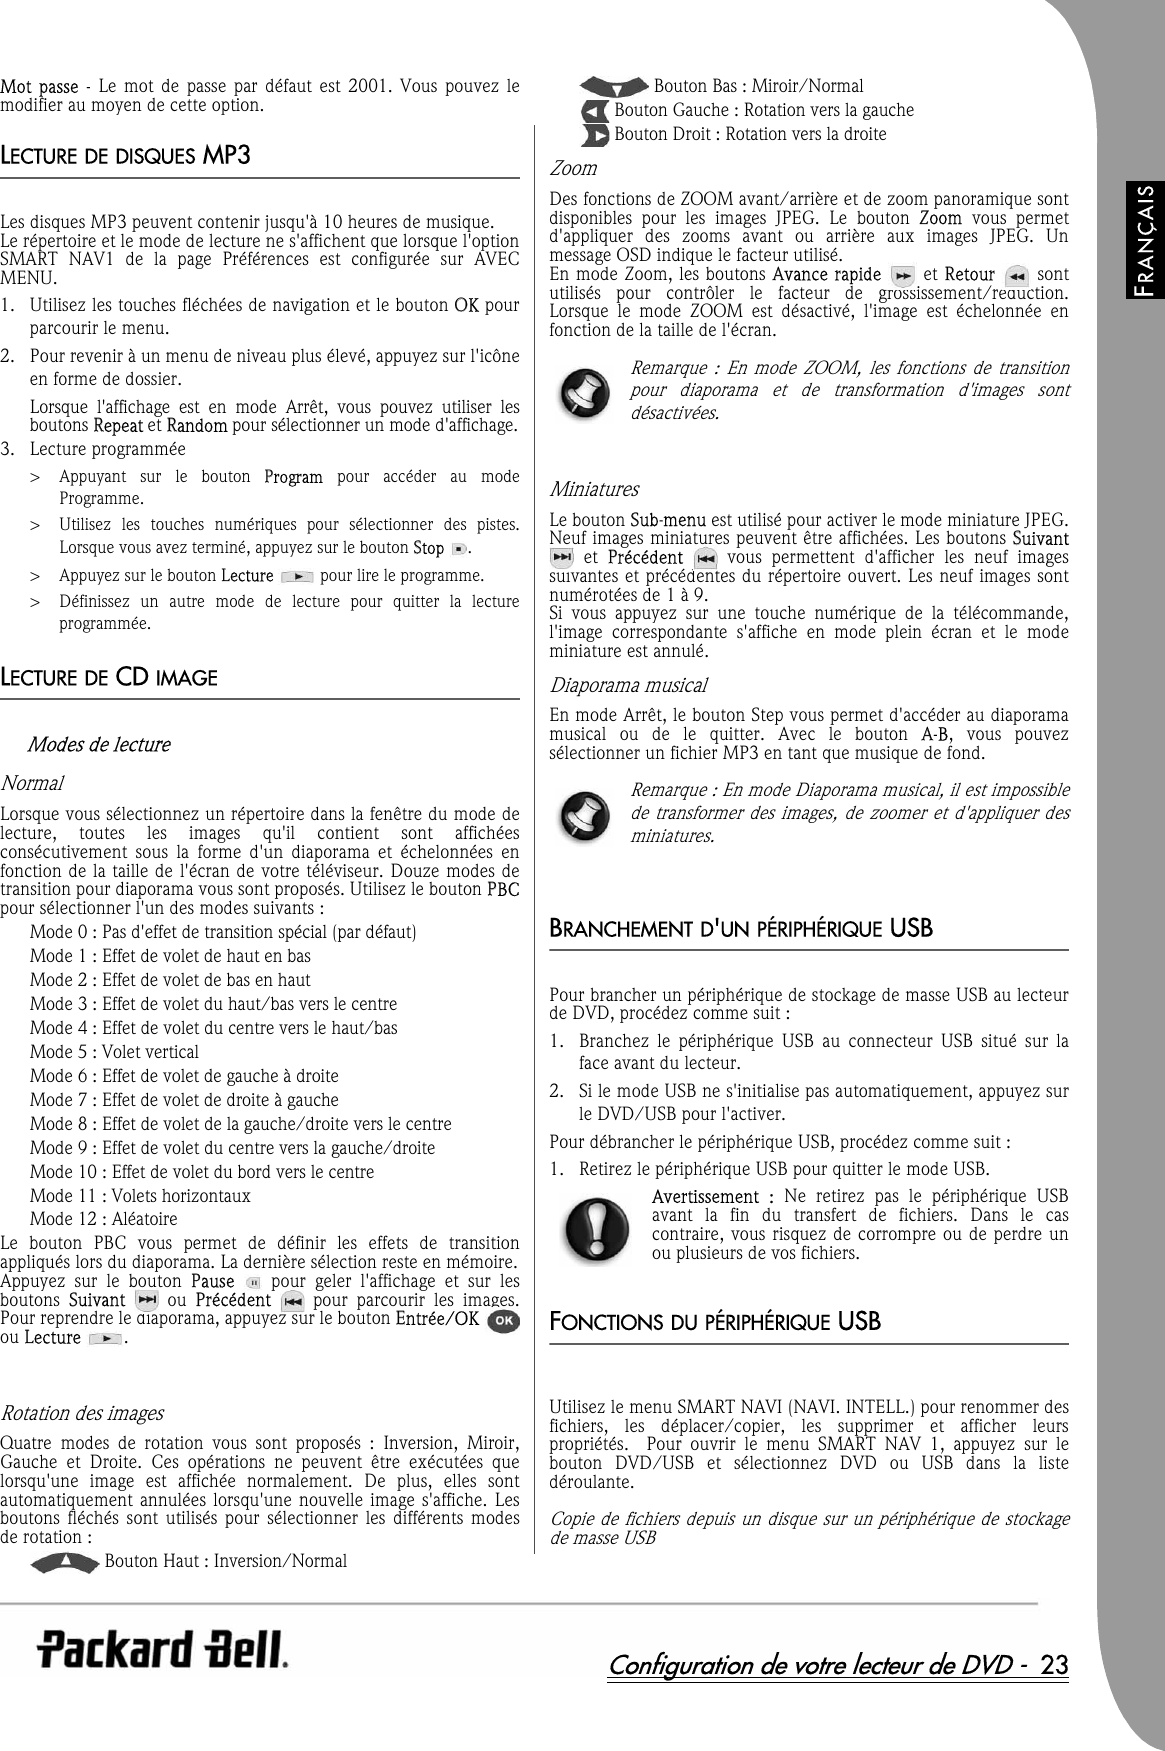 Packard Bell Dvx 460 Users Manual Dvd Usb